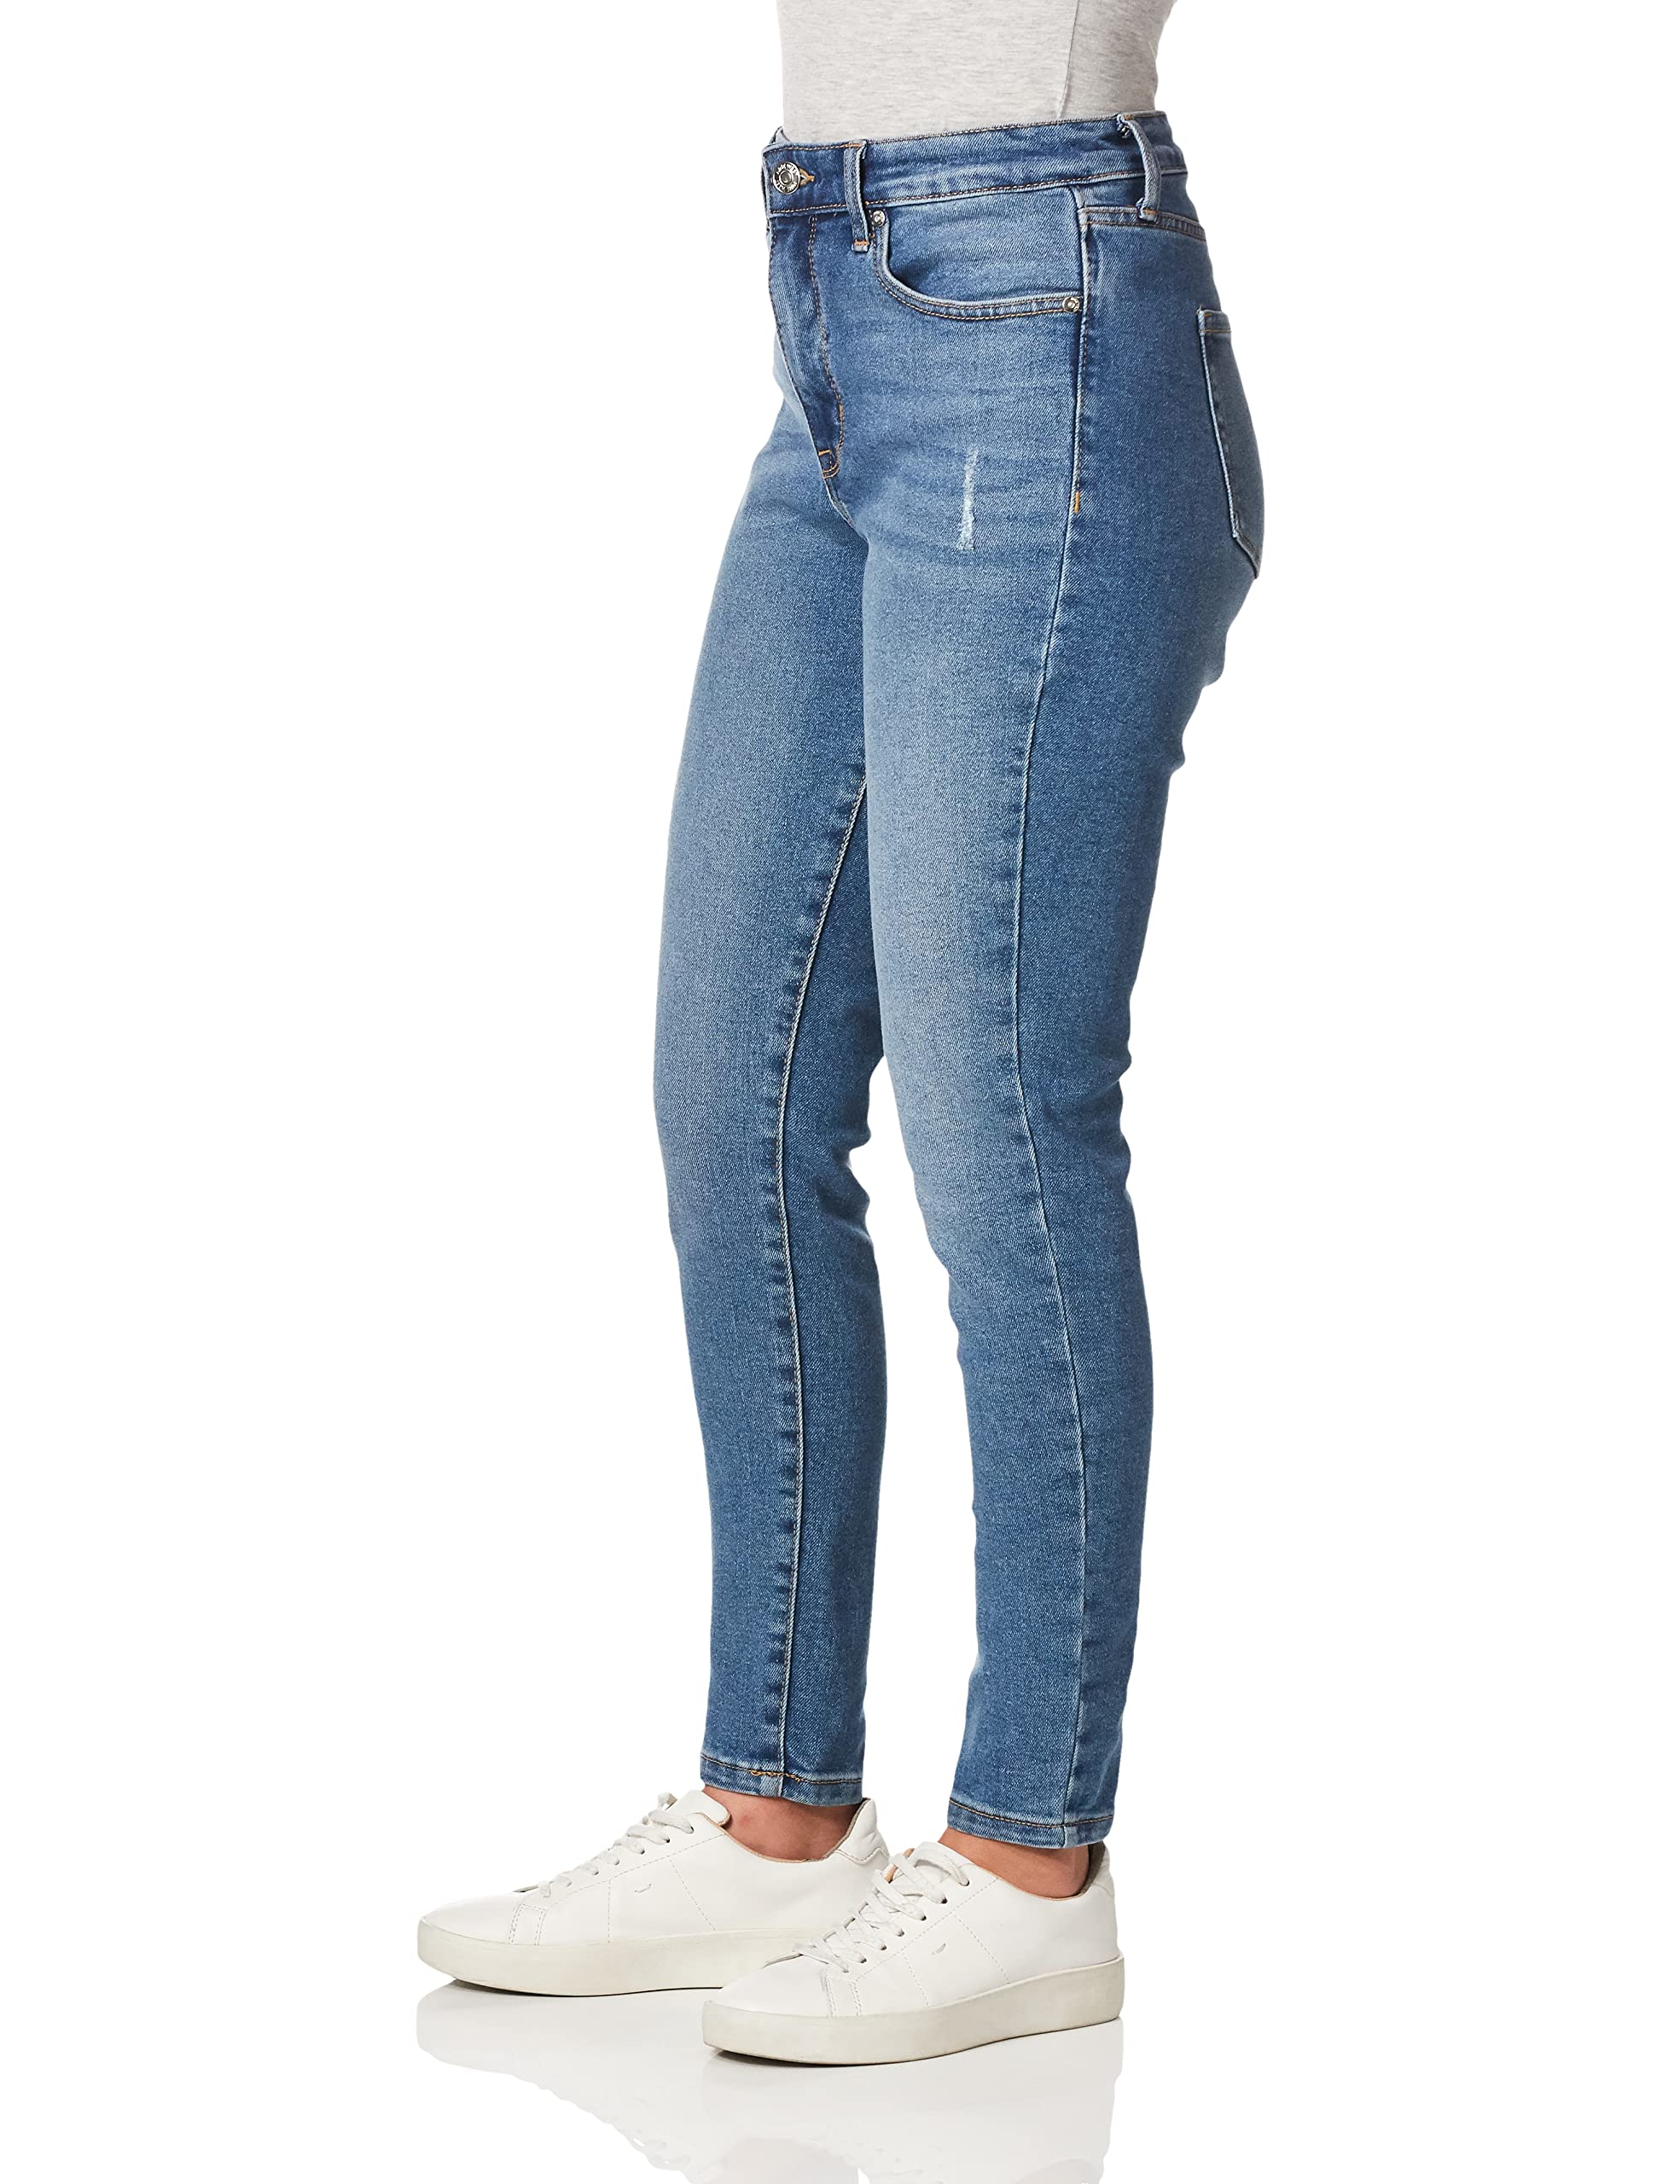 NINE WEST Women's High Rise Perfect Skinny Jean, Jules, 14 Regular